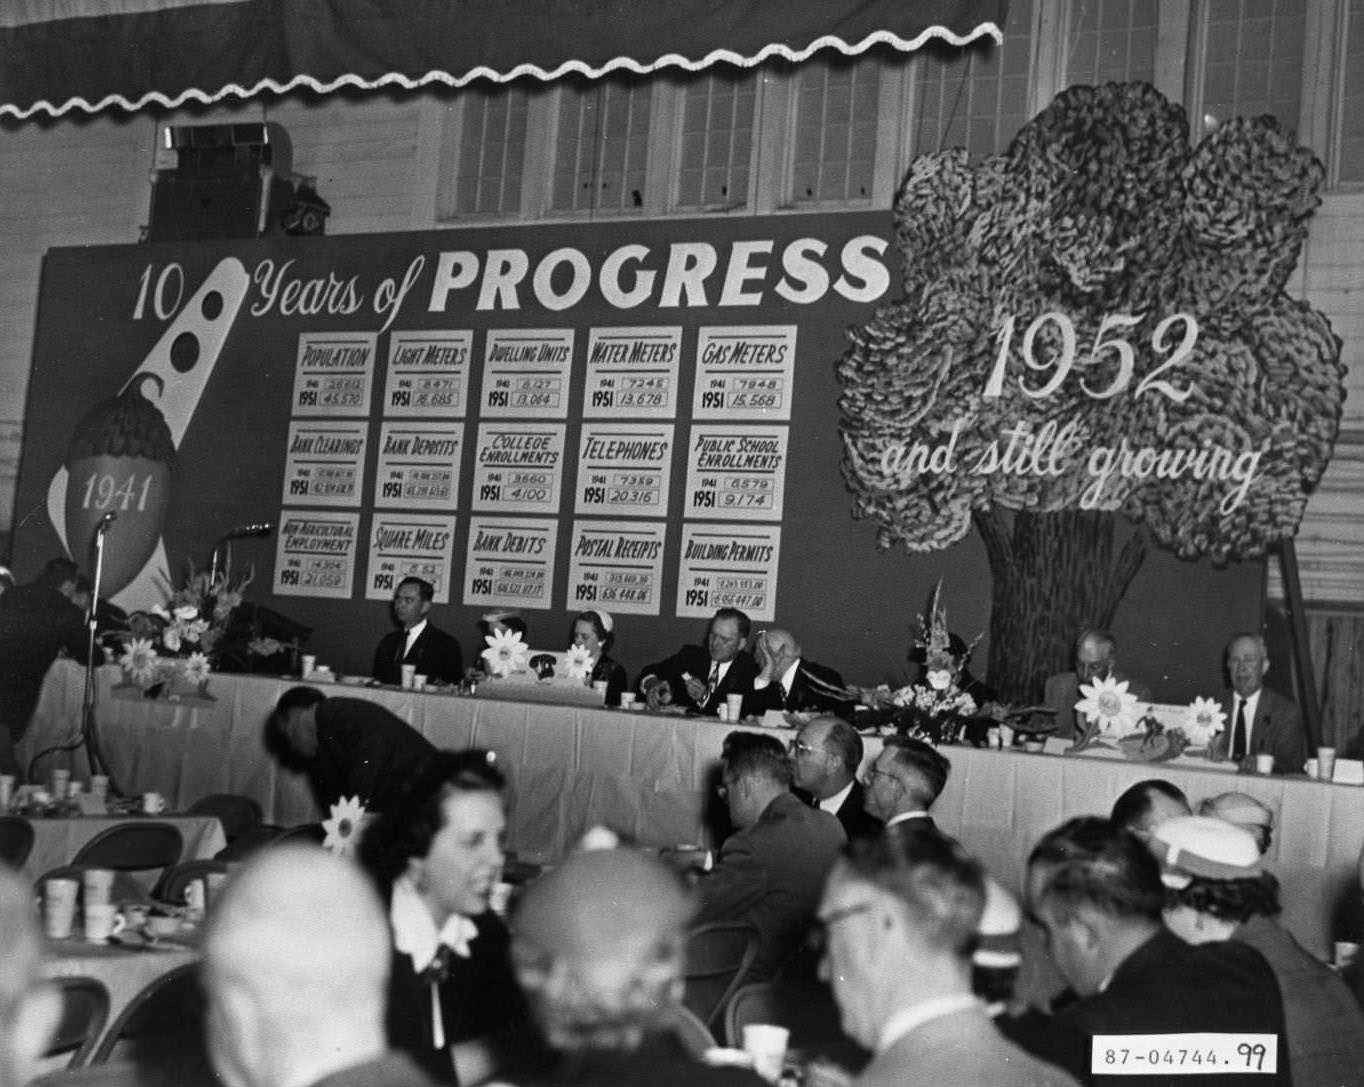 People at a Banquet Celebrating Progress, 1952